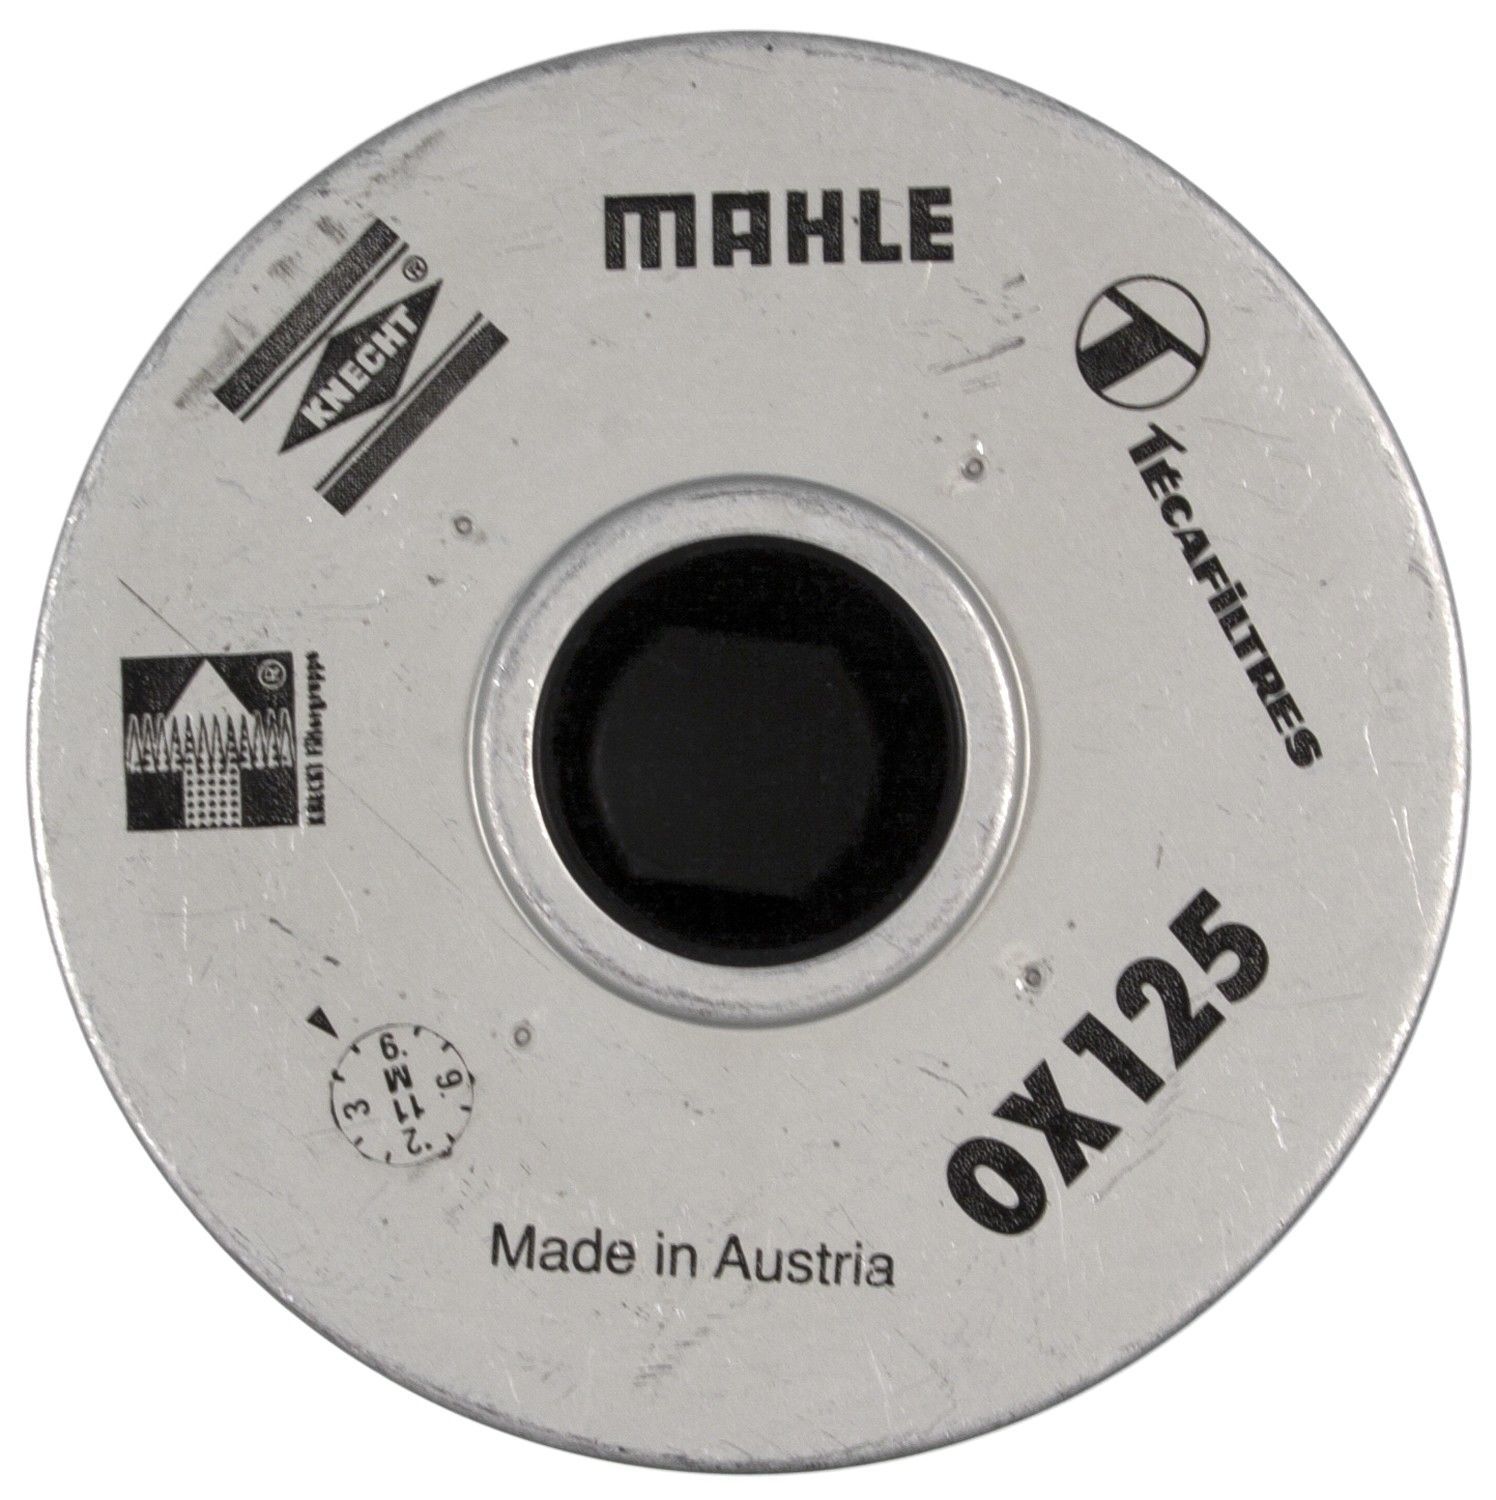 MAHLE ORIGINAL - Engine Oil Filter - MHL OX 125